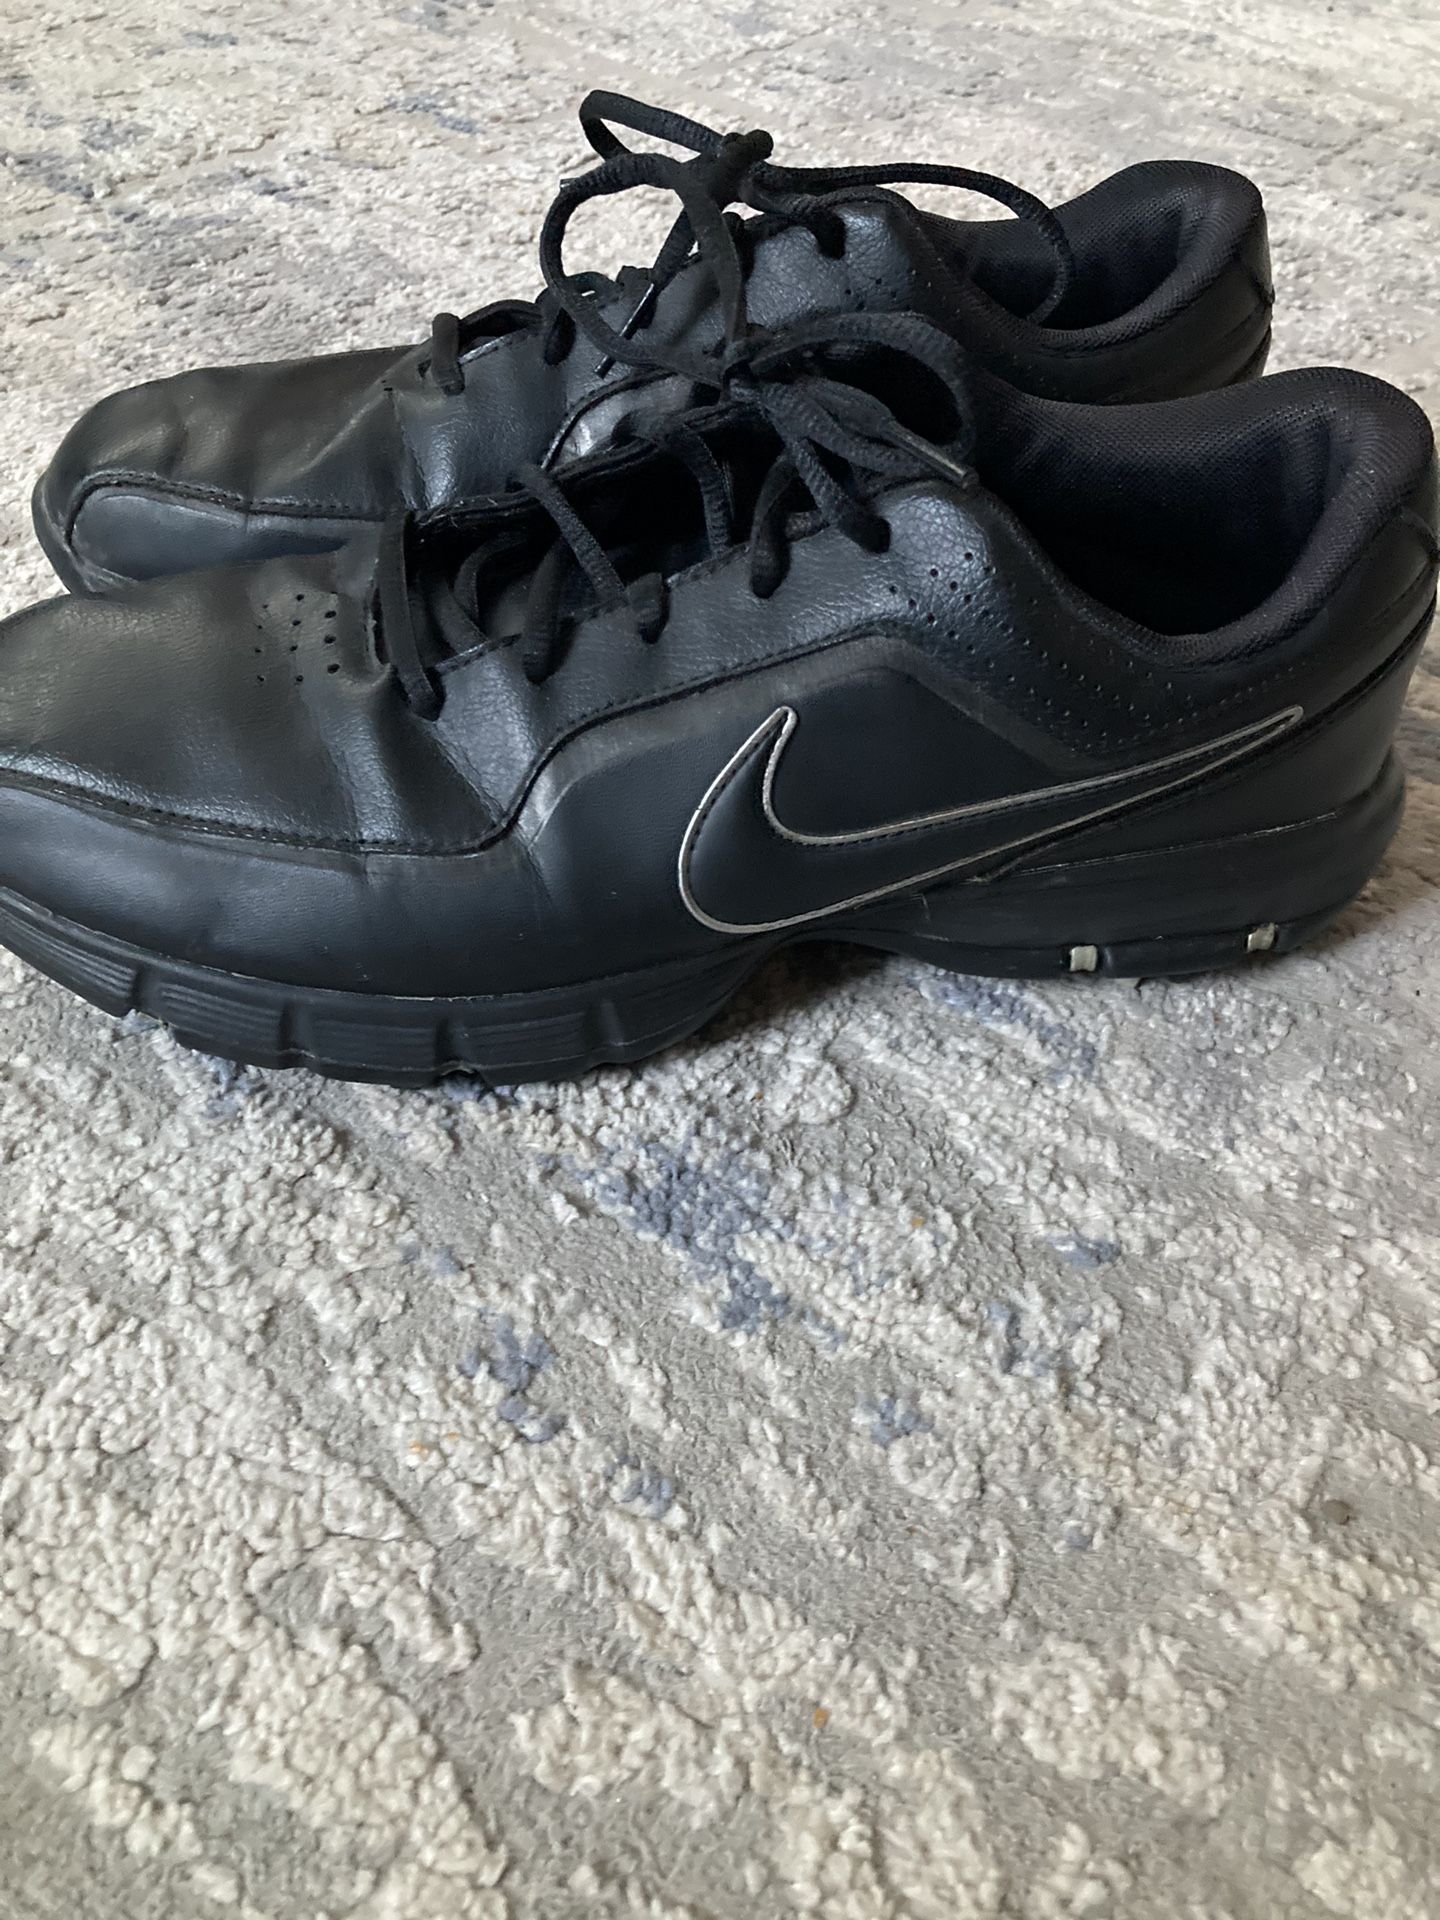 Men’s Nike Golf Shoes Size 9.5